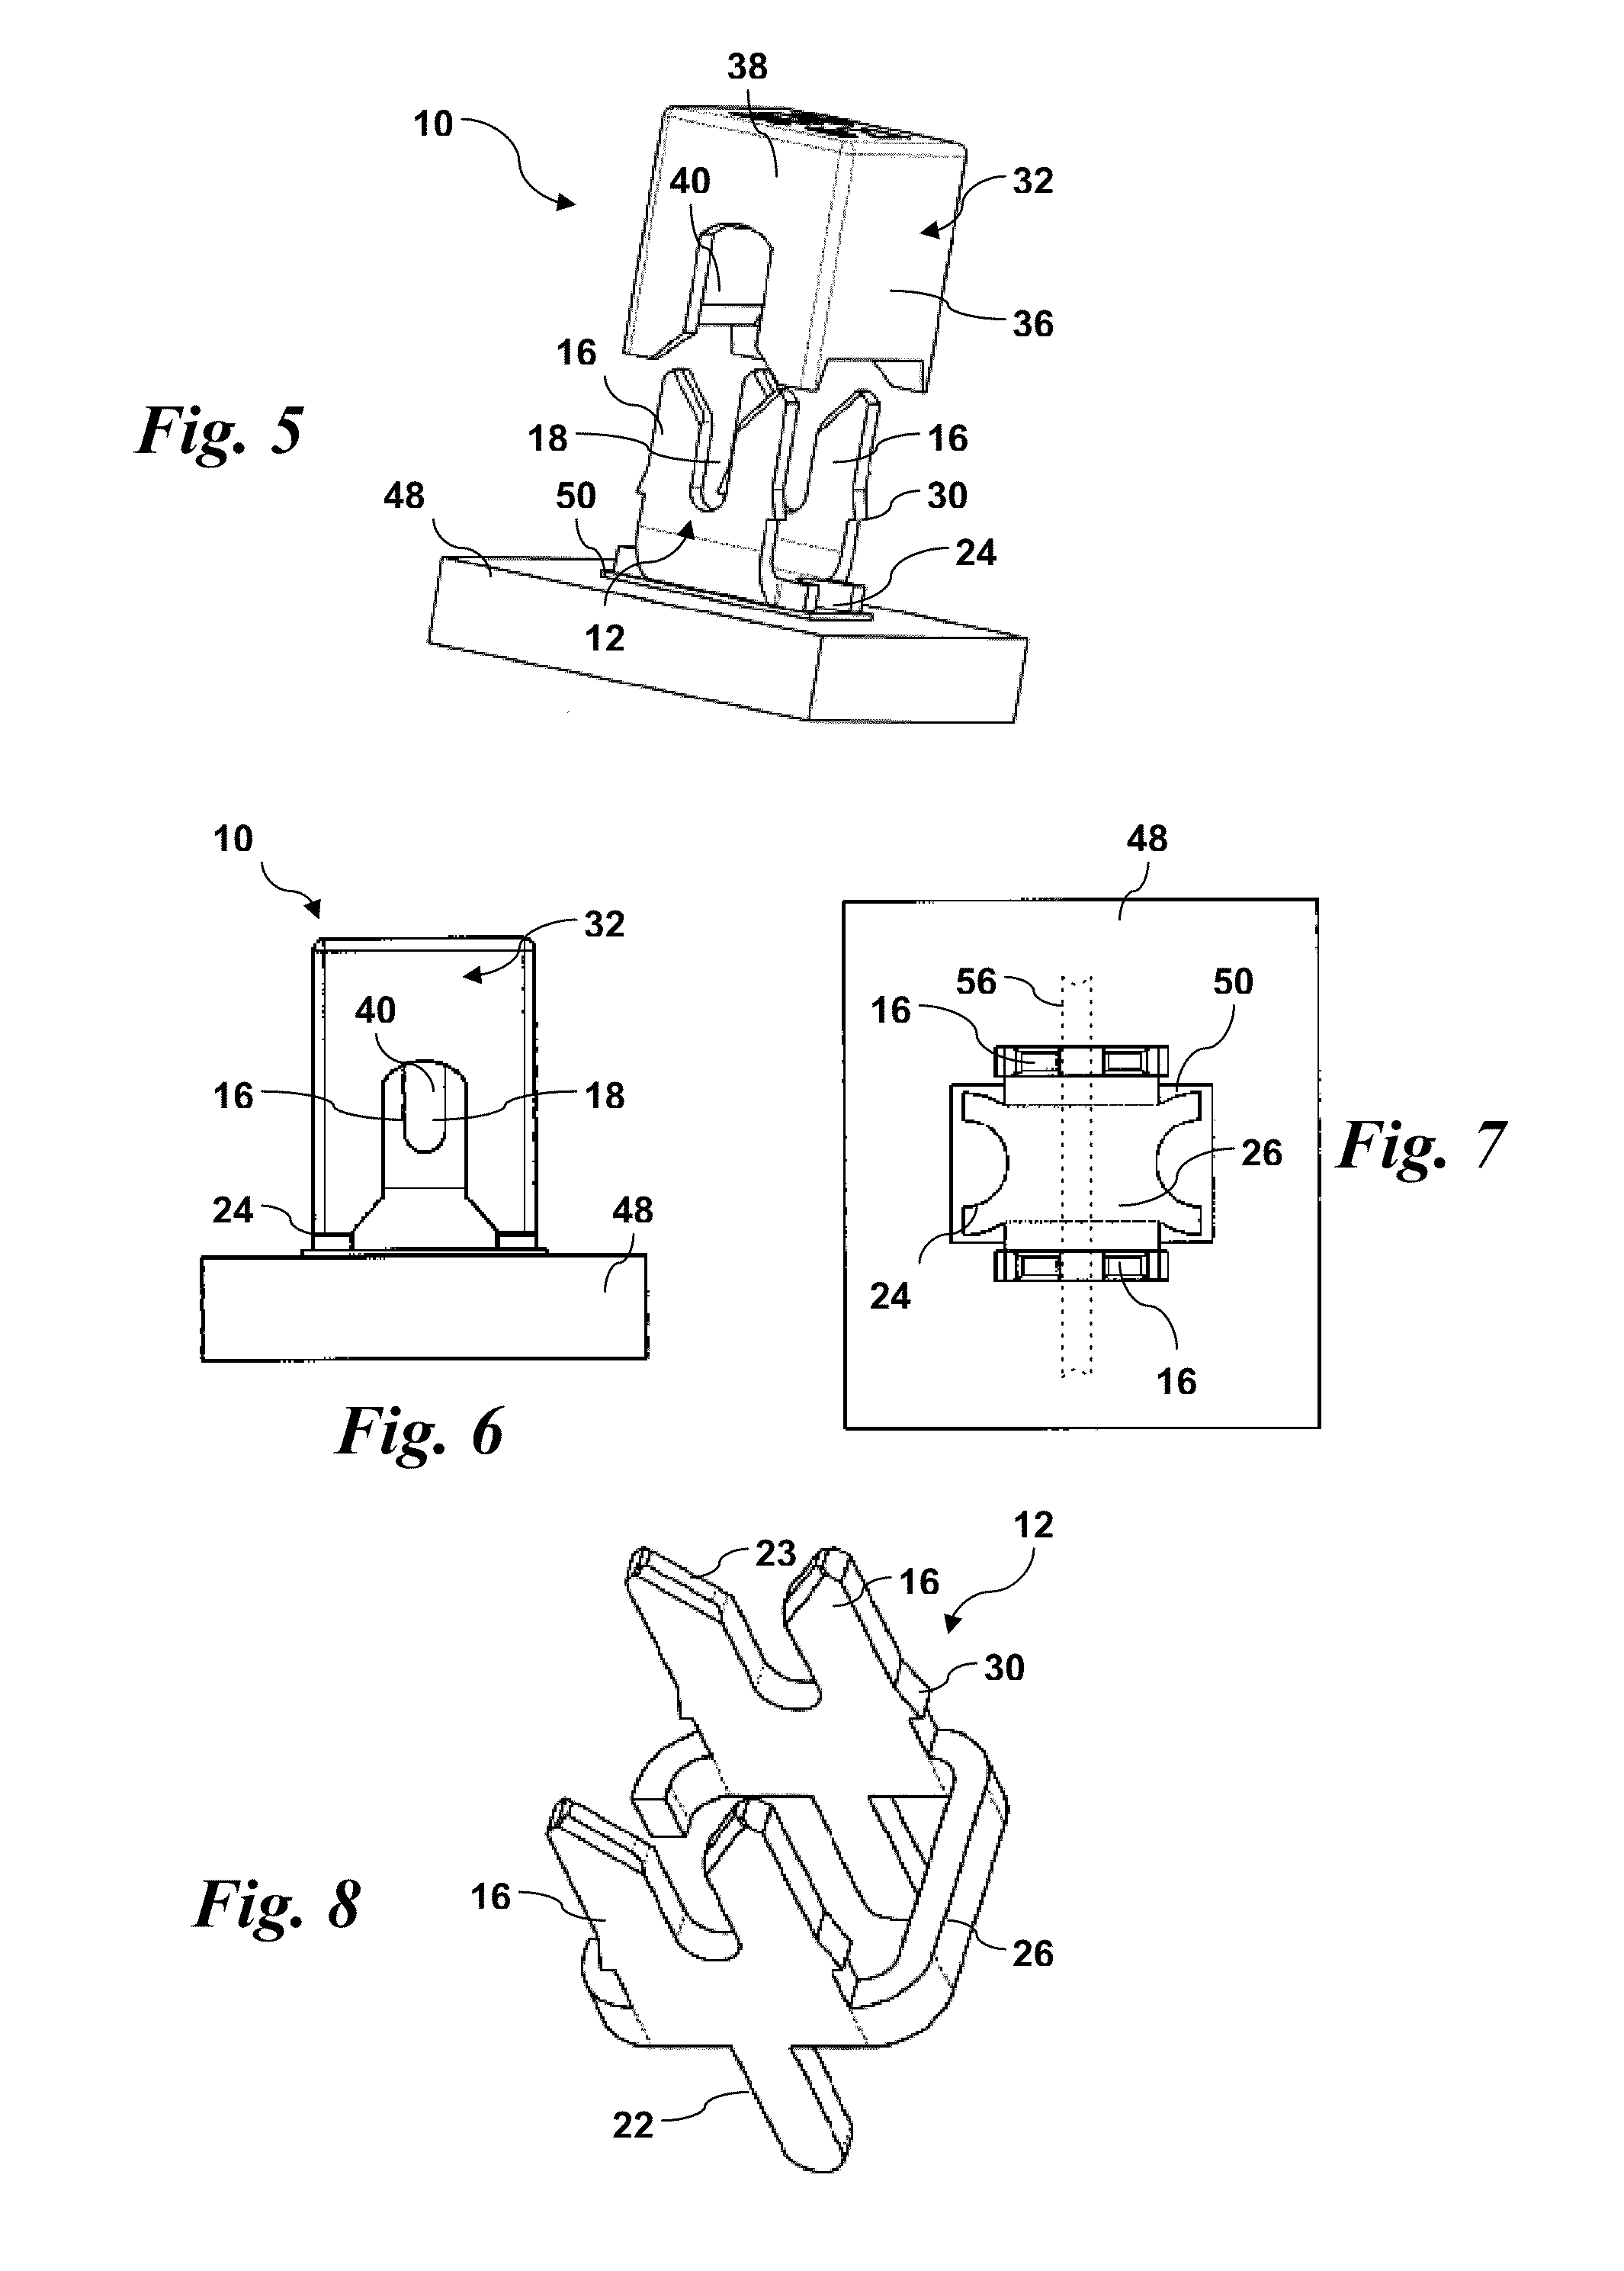 Insulation displacement connector (IDC)